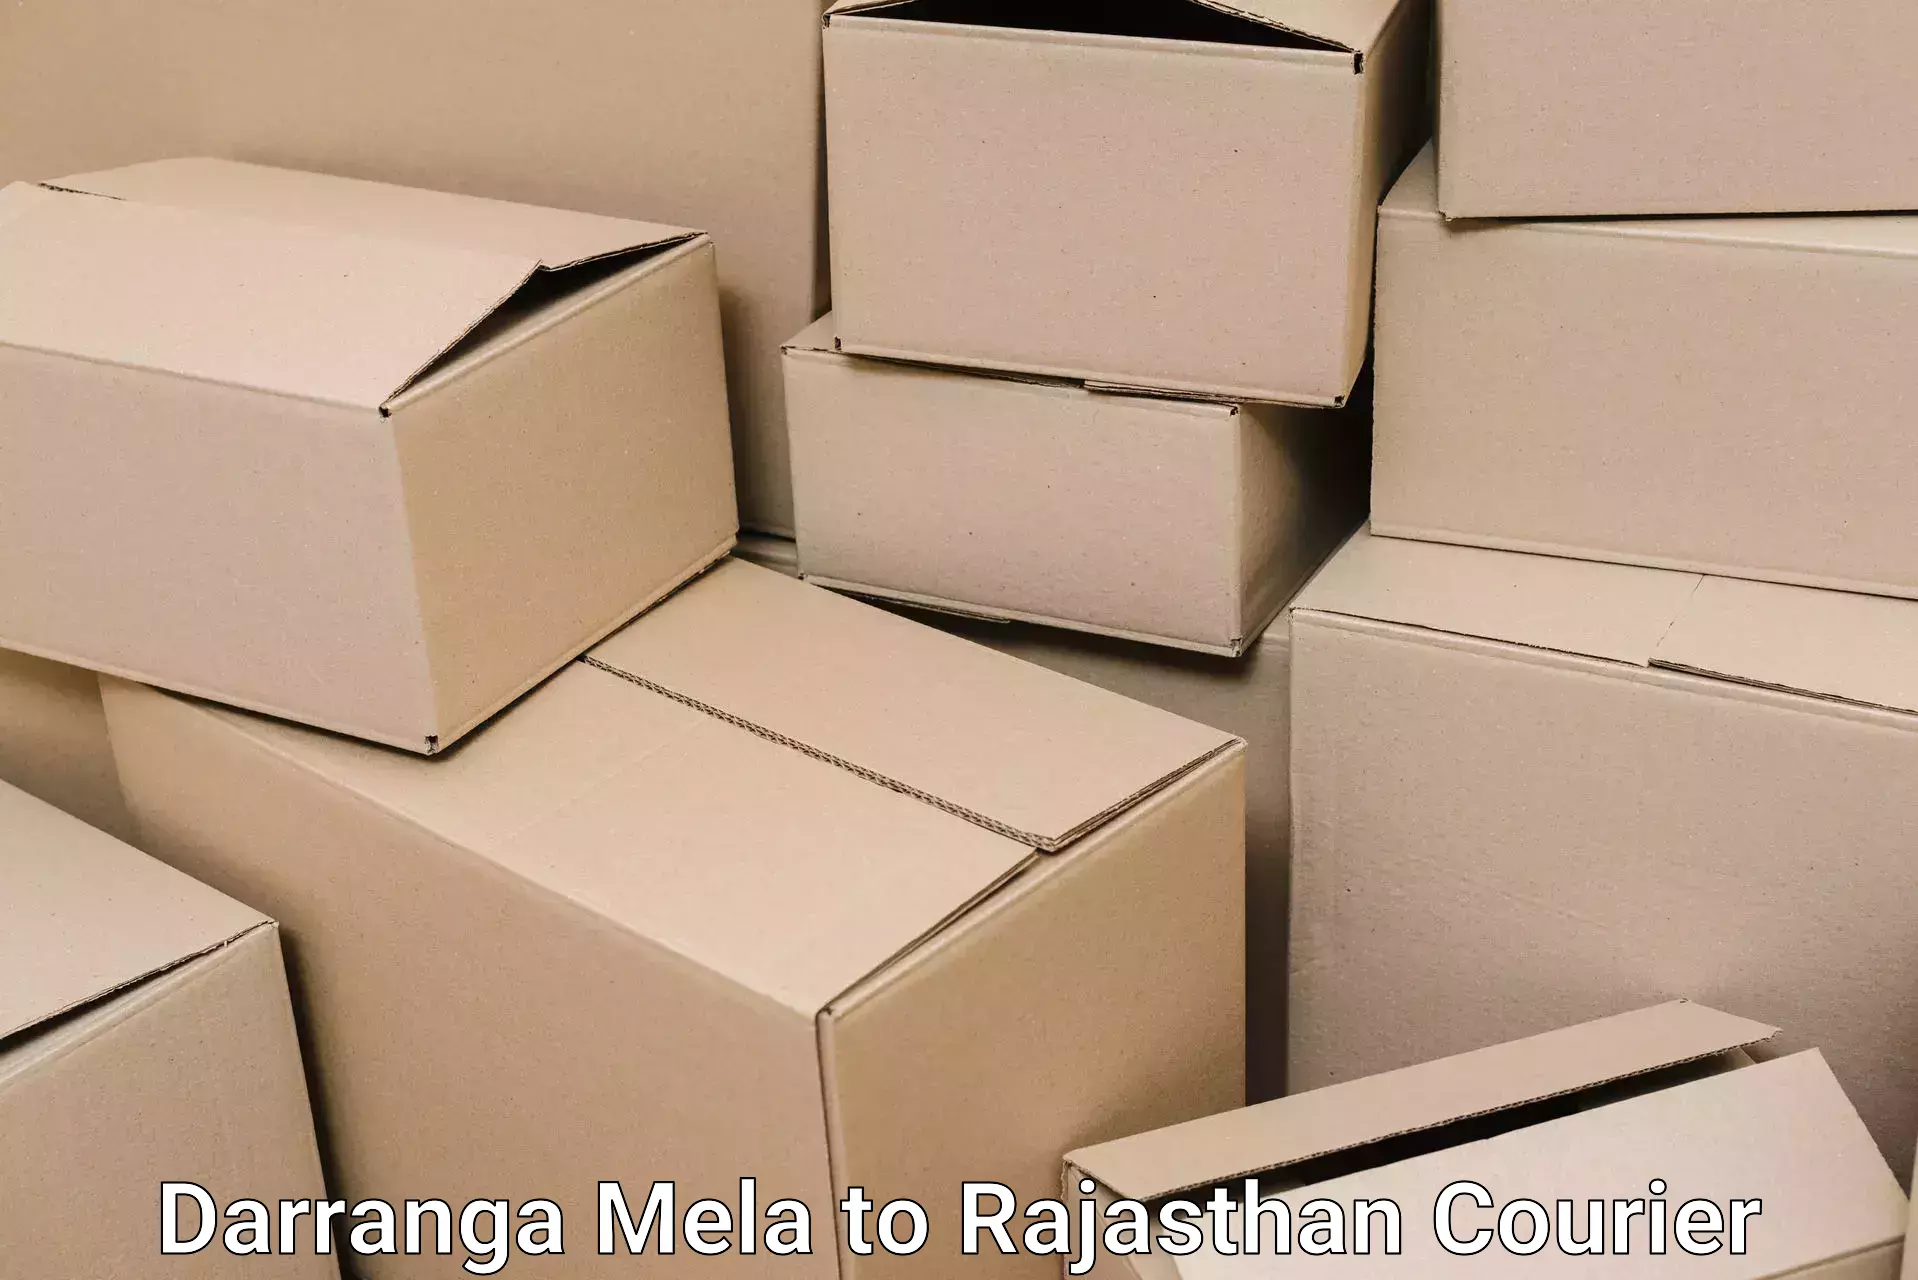 Household moving and storage in Darranga Mela to Sultana